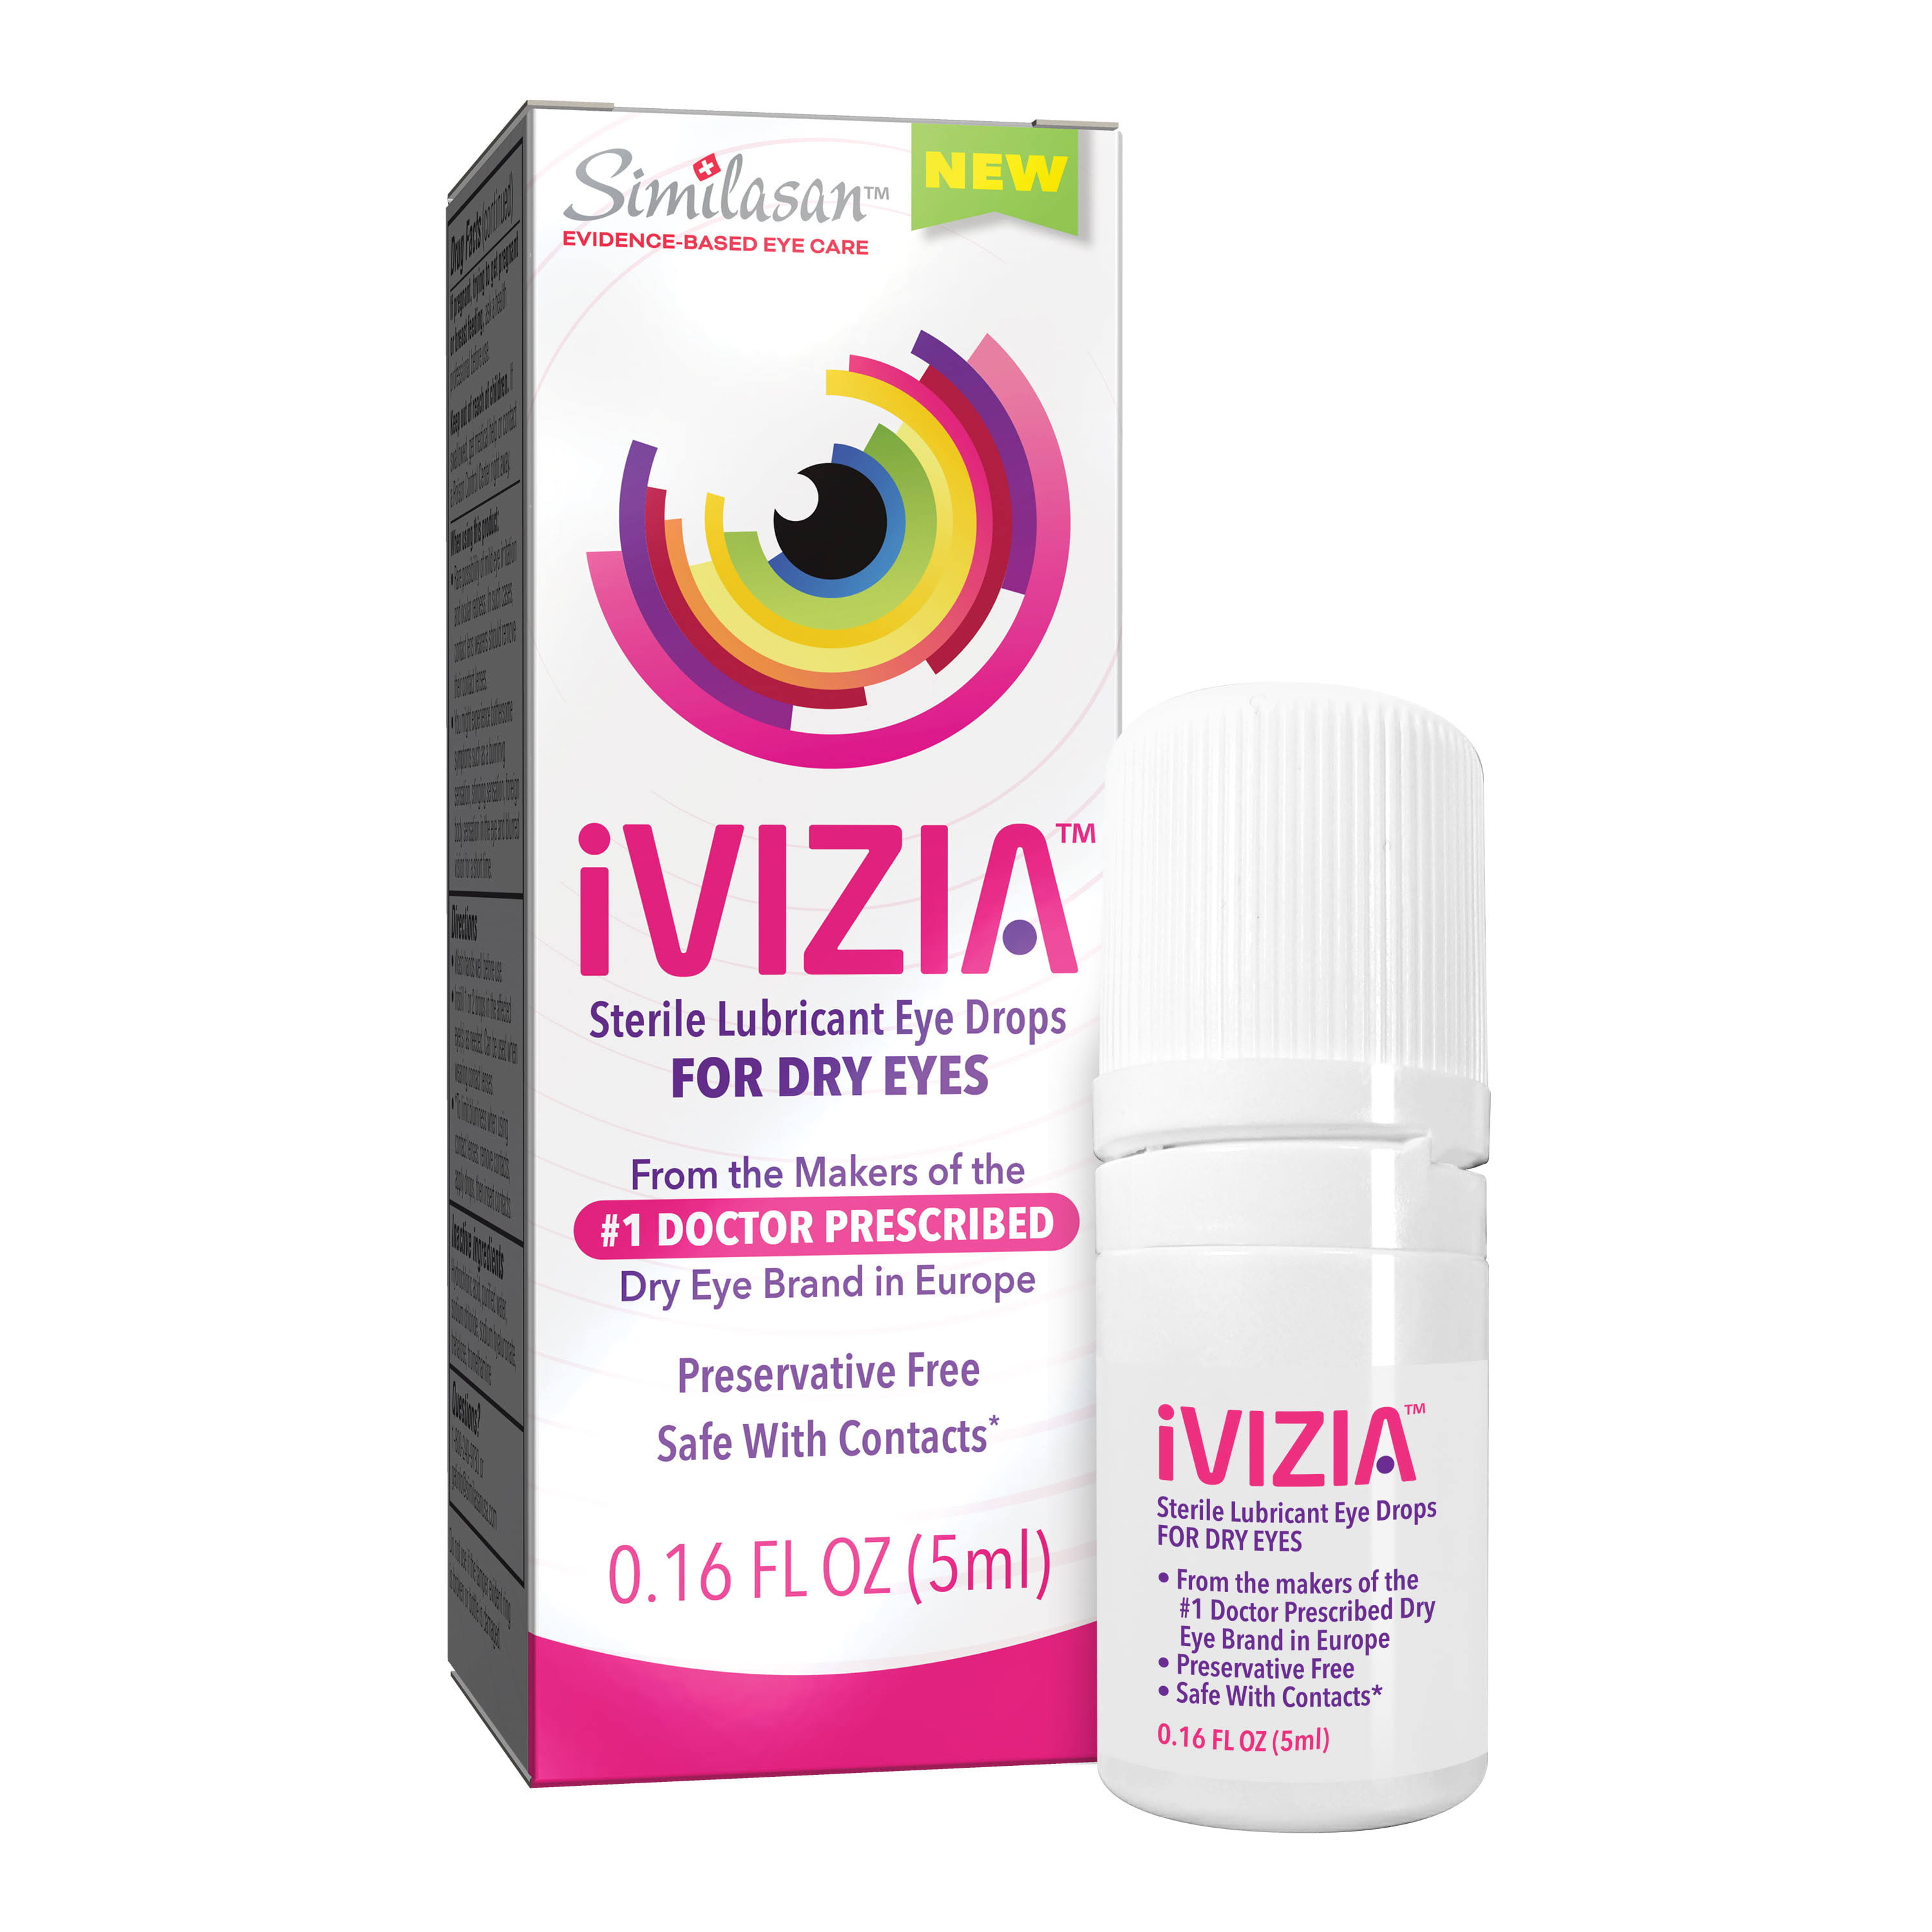 Similasan iVizia Eye Drops, Lubricant, Sterile, For Dry Eyes - 0.16 fl oz